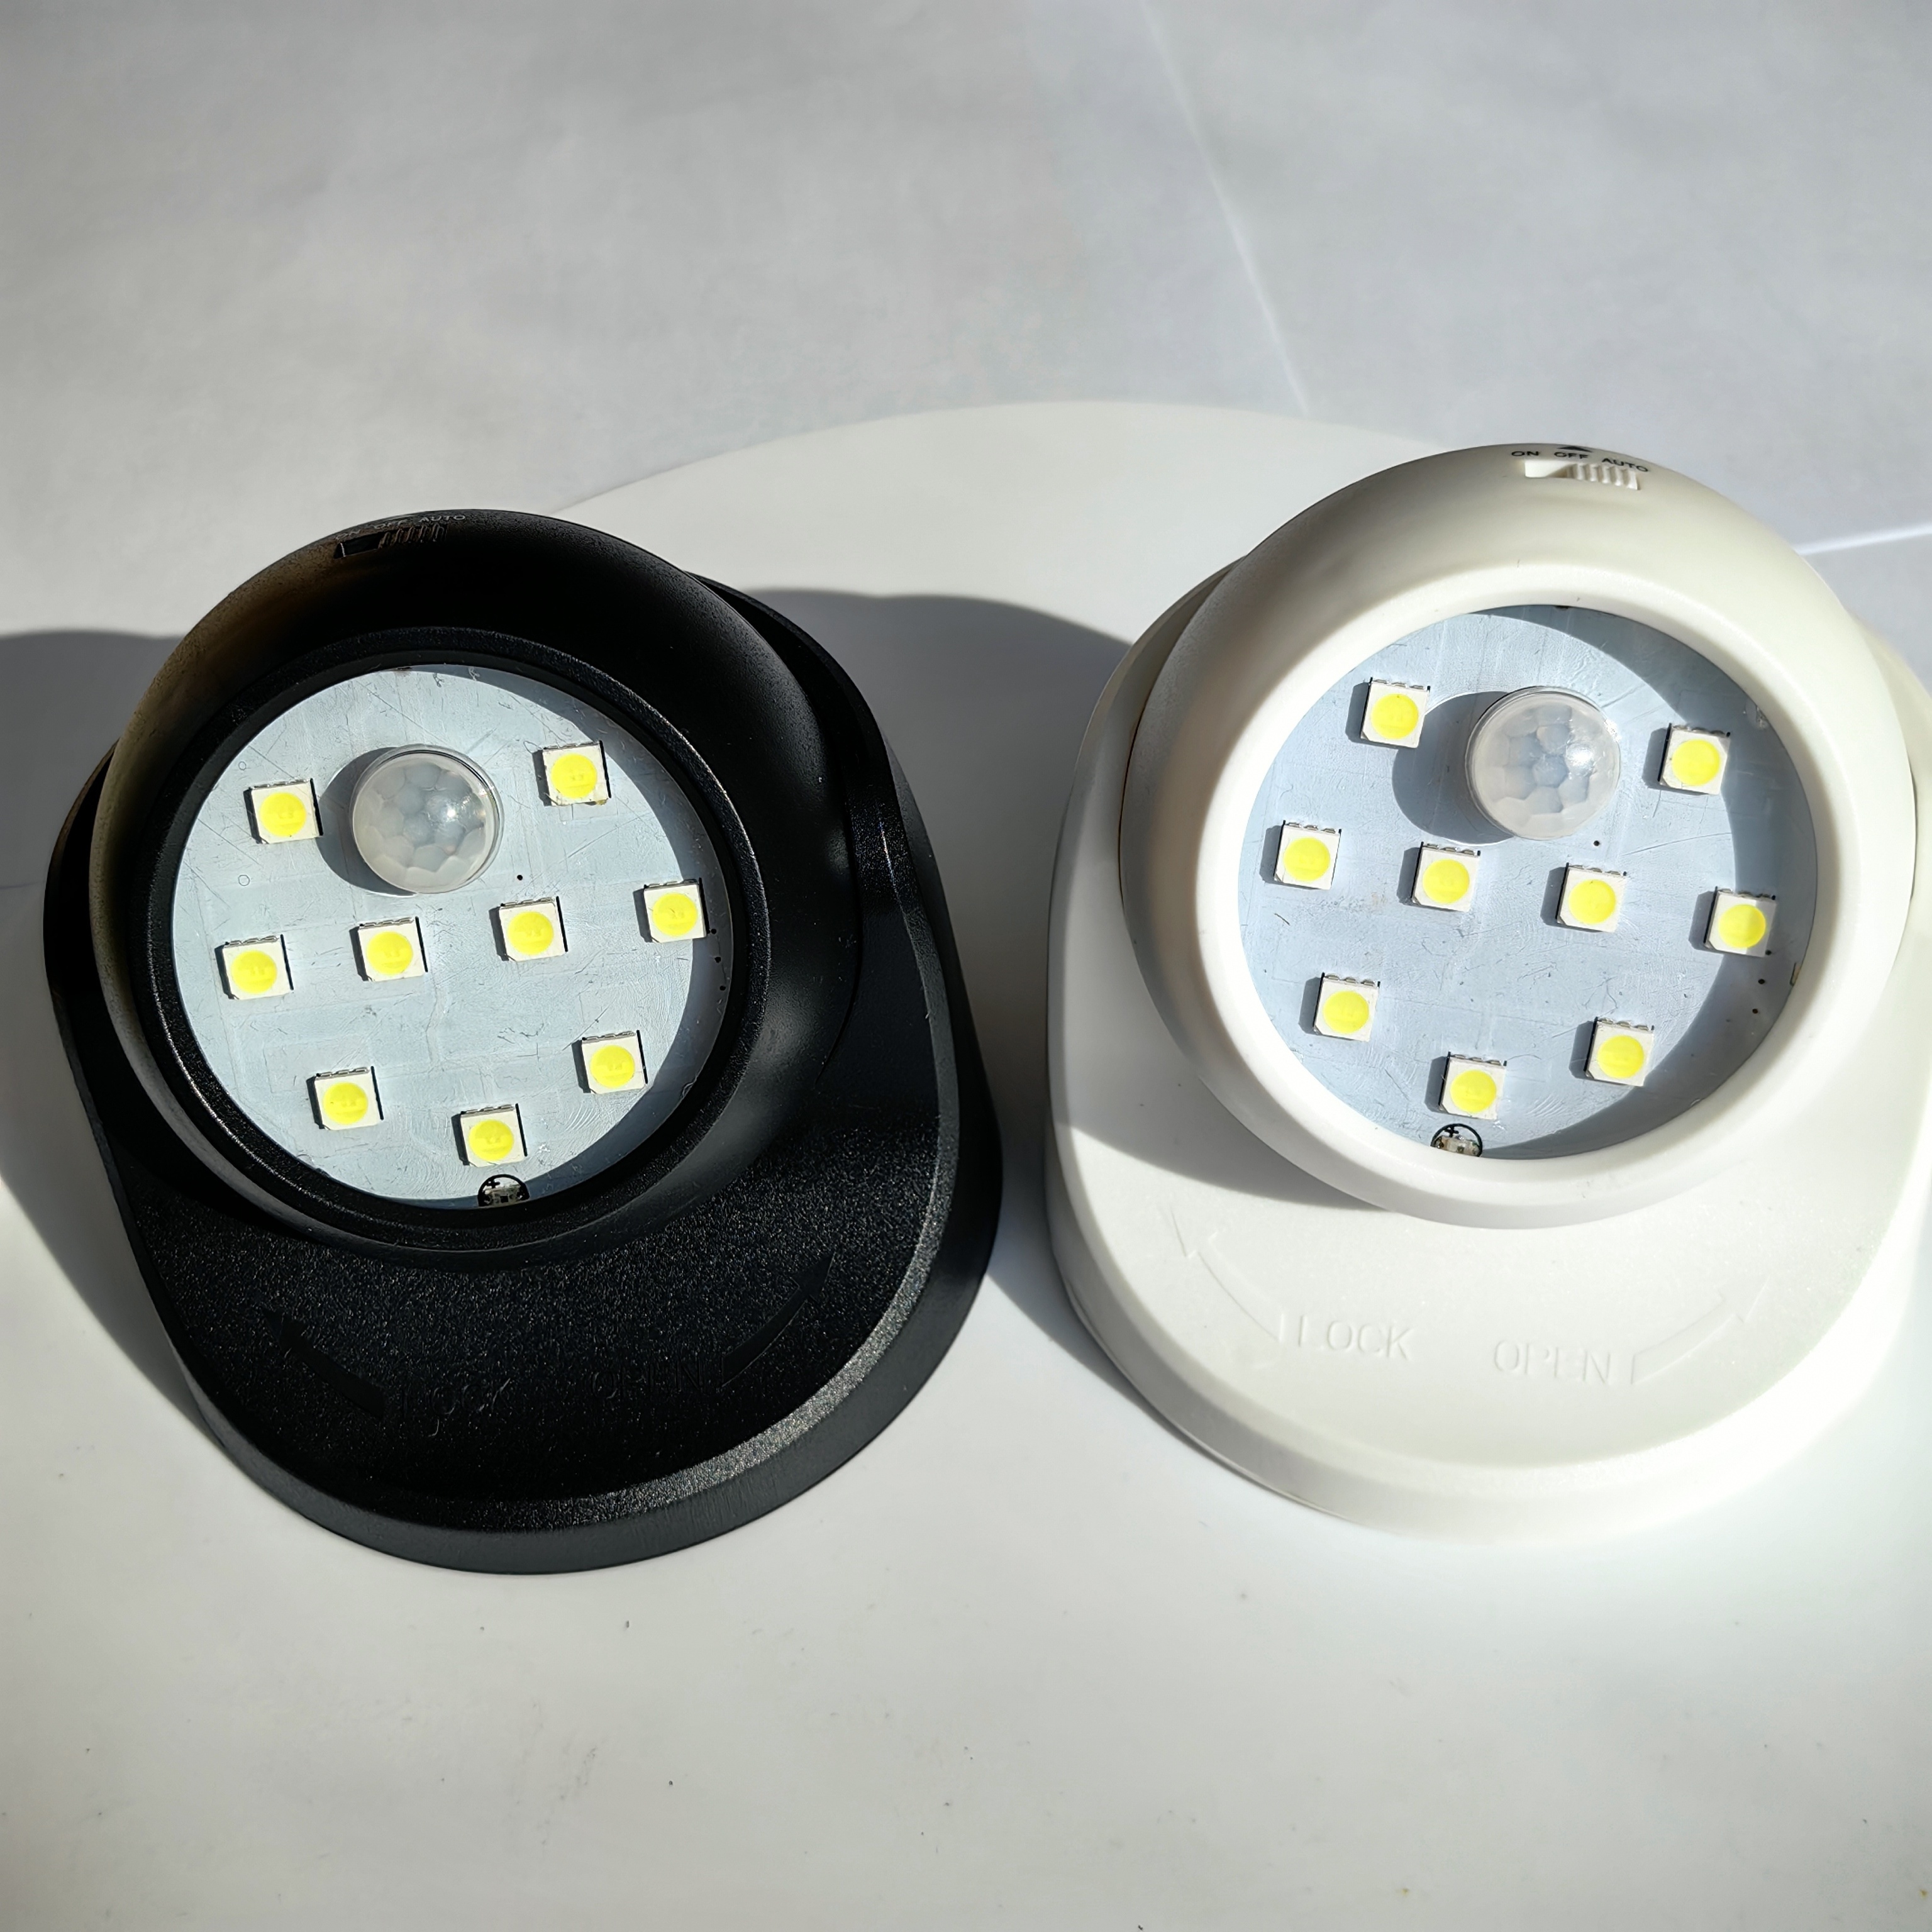 Sensor Night Wall Light, Battery Powered Motion Sensor Lights